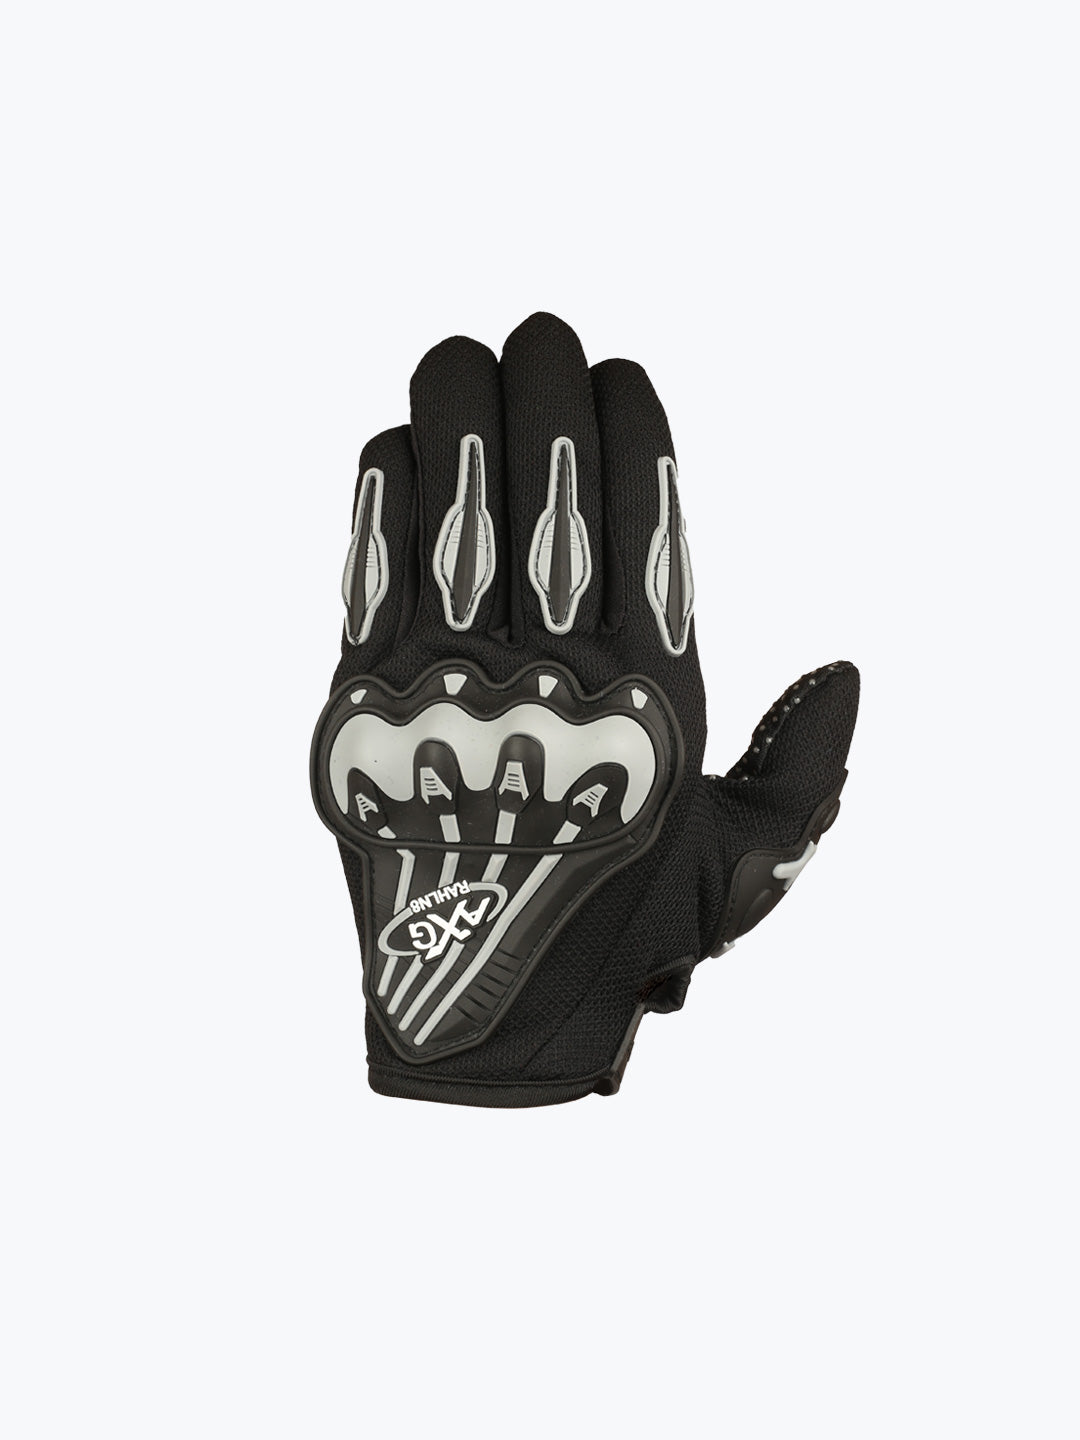 AXG Glove Black Grey